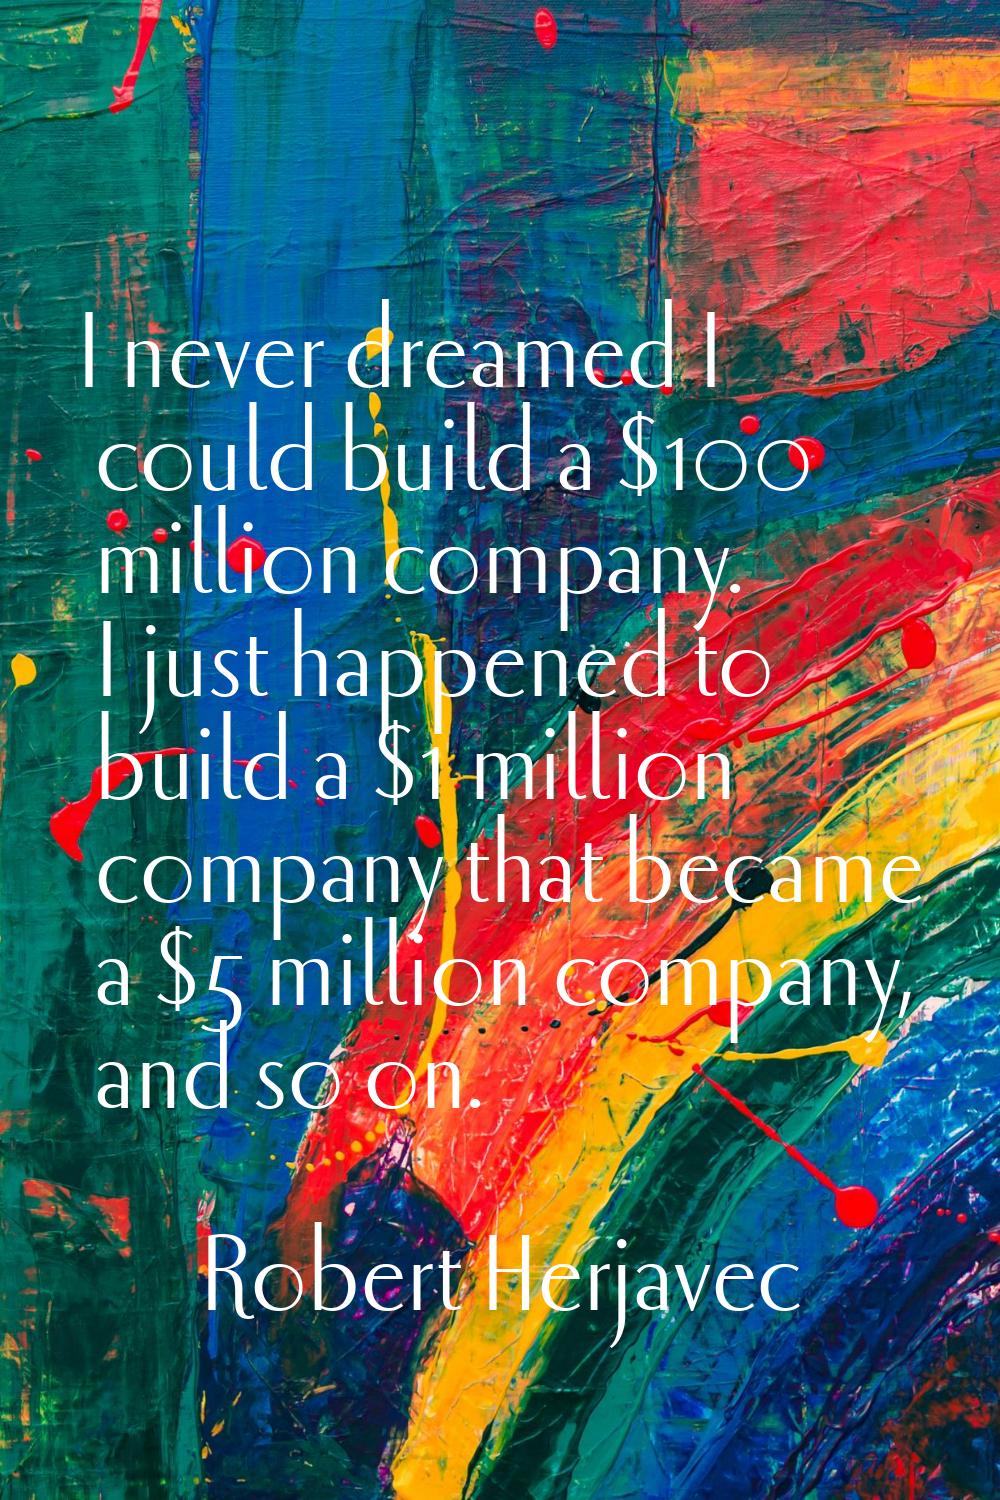 I never dreamed I could build a $100 million company. I just happened to build a $1 million company